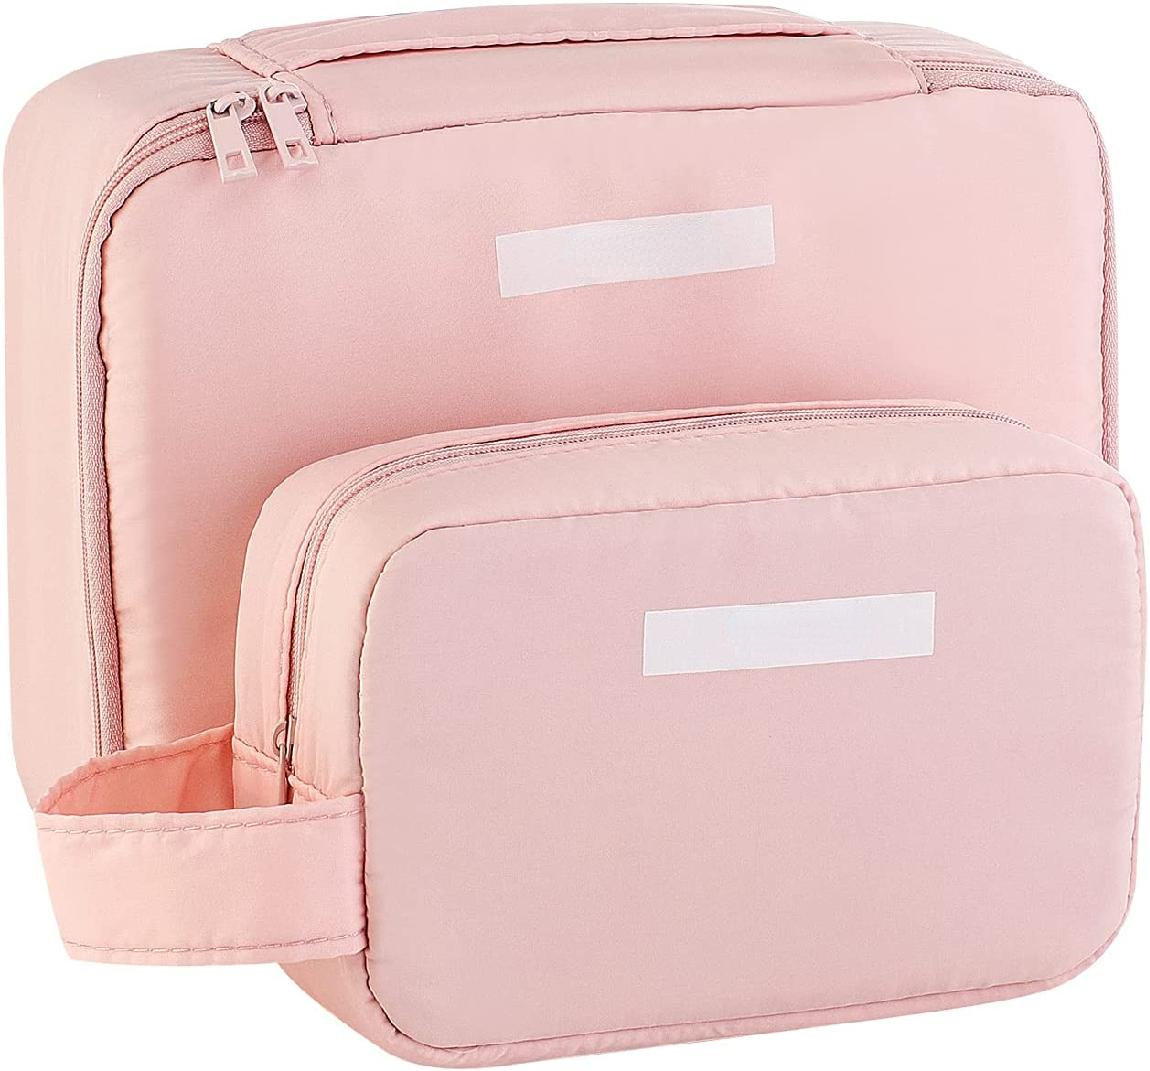 Jeffree Star Cosmetics Travel Makeup Bag Pink Jawbreaker | Beautylish | Makeup  bags travel, Travel cosmetic bags, Jeffree star